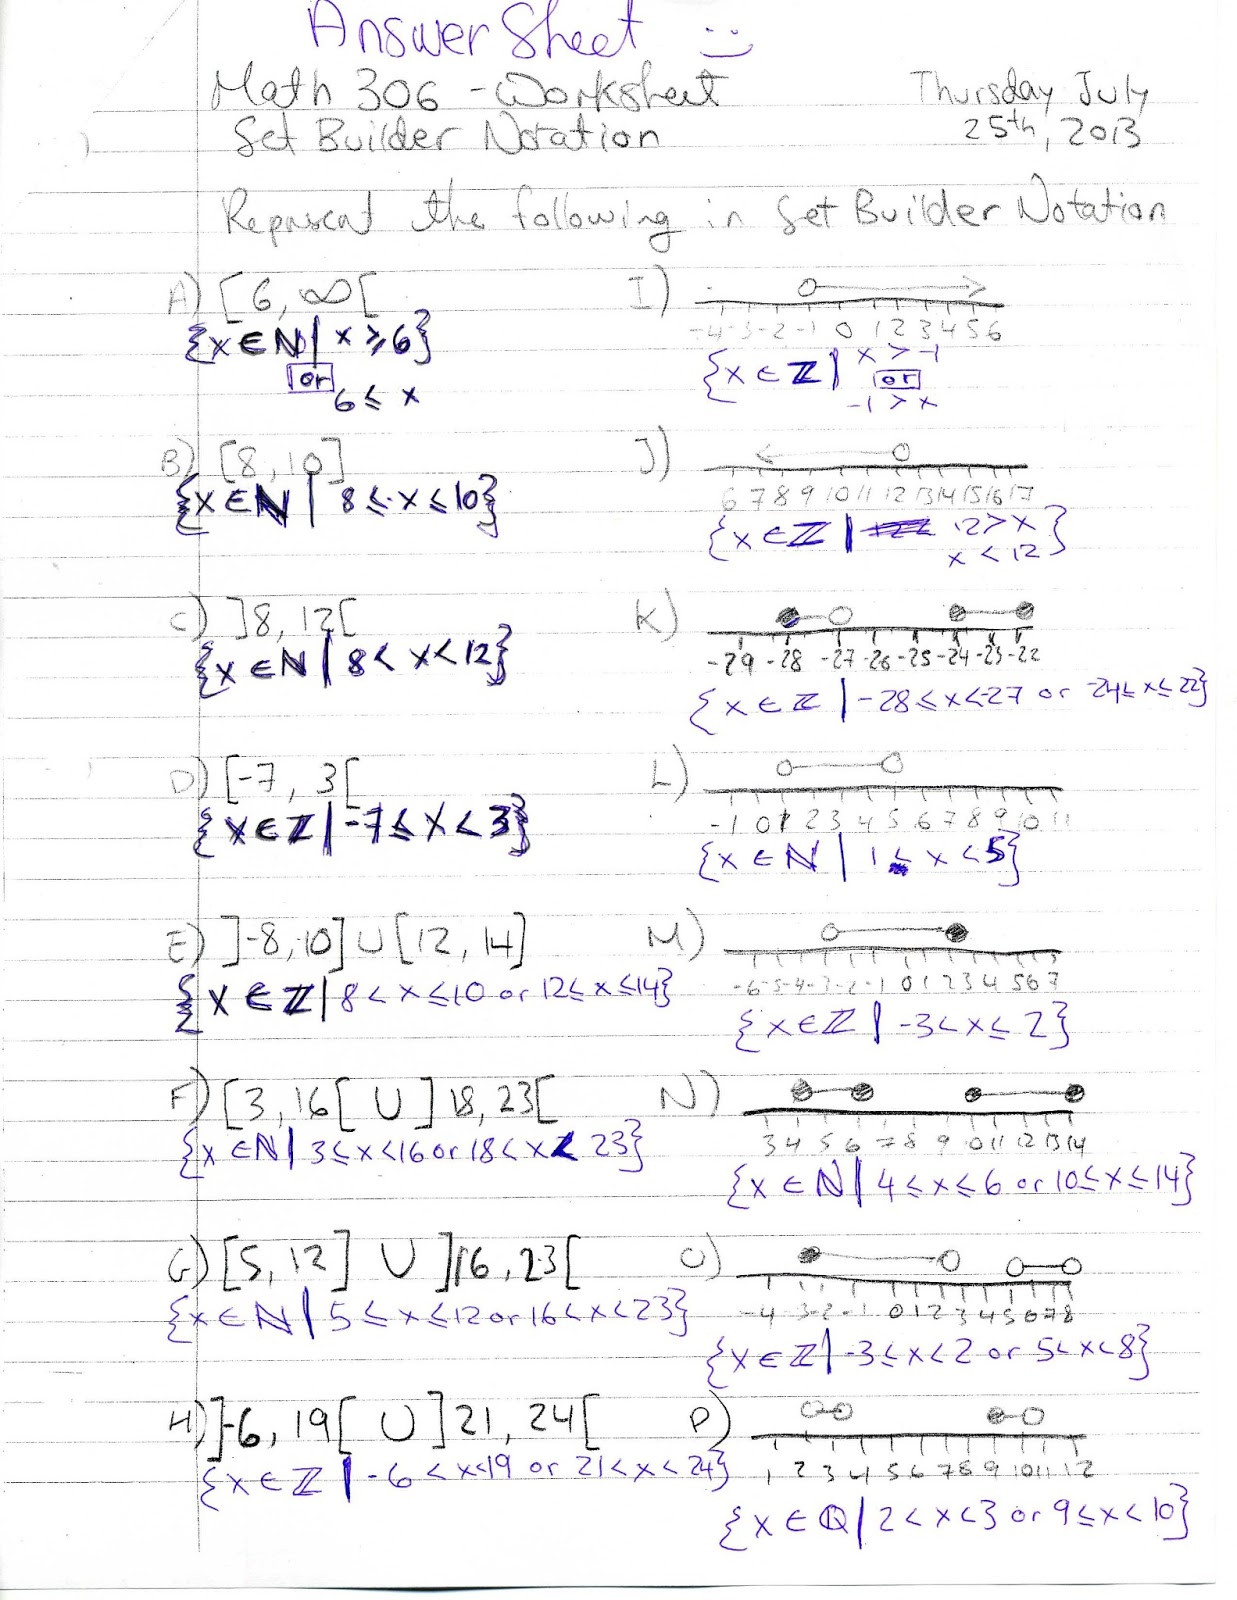 Set Builder Notation Worksheet Gyles Summer Math 2013 Answer Sheet for Set Builder Notation